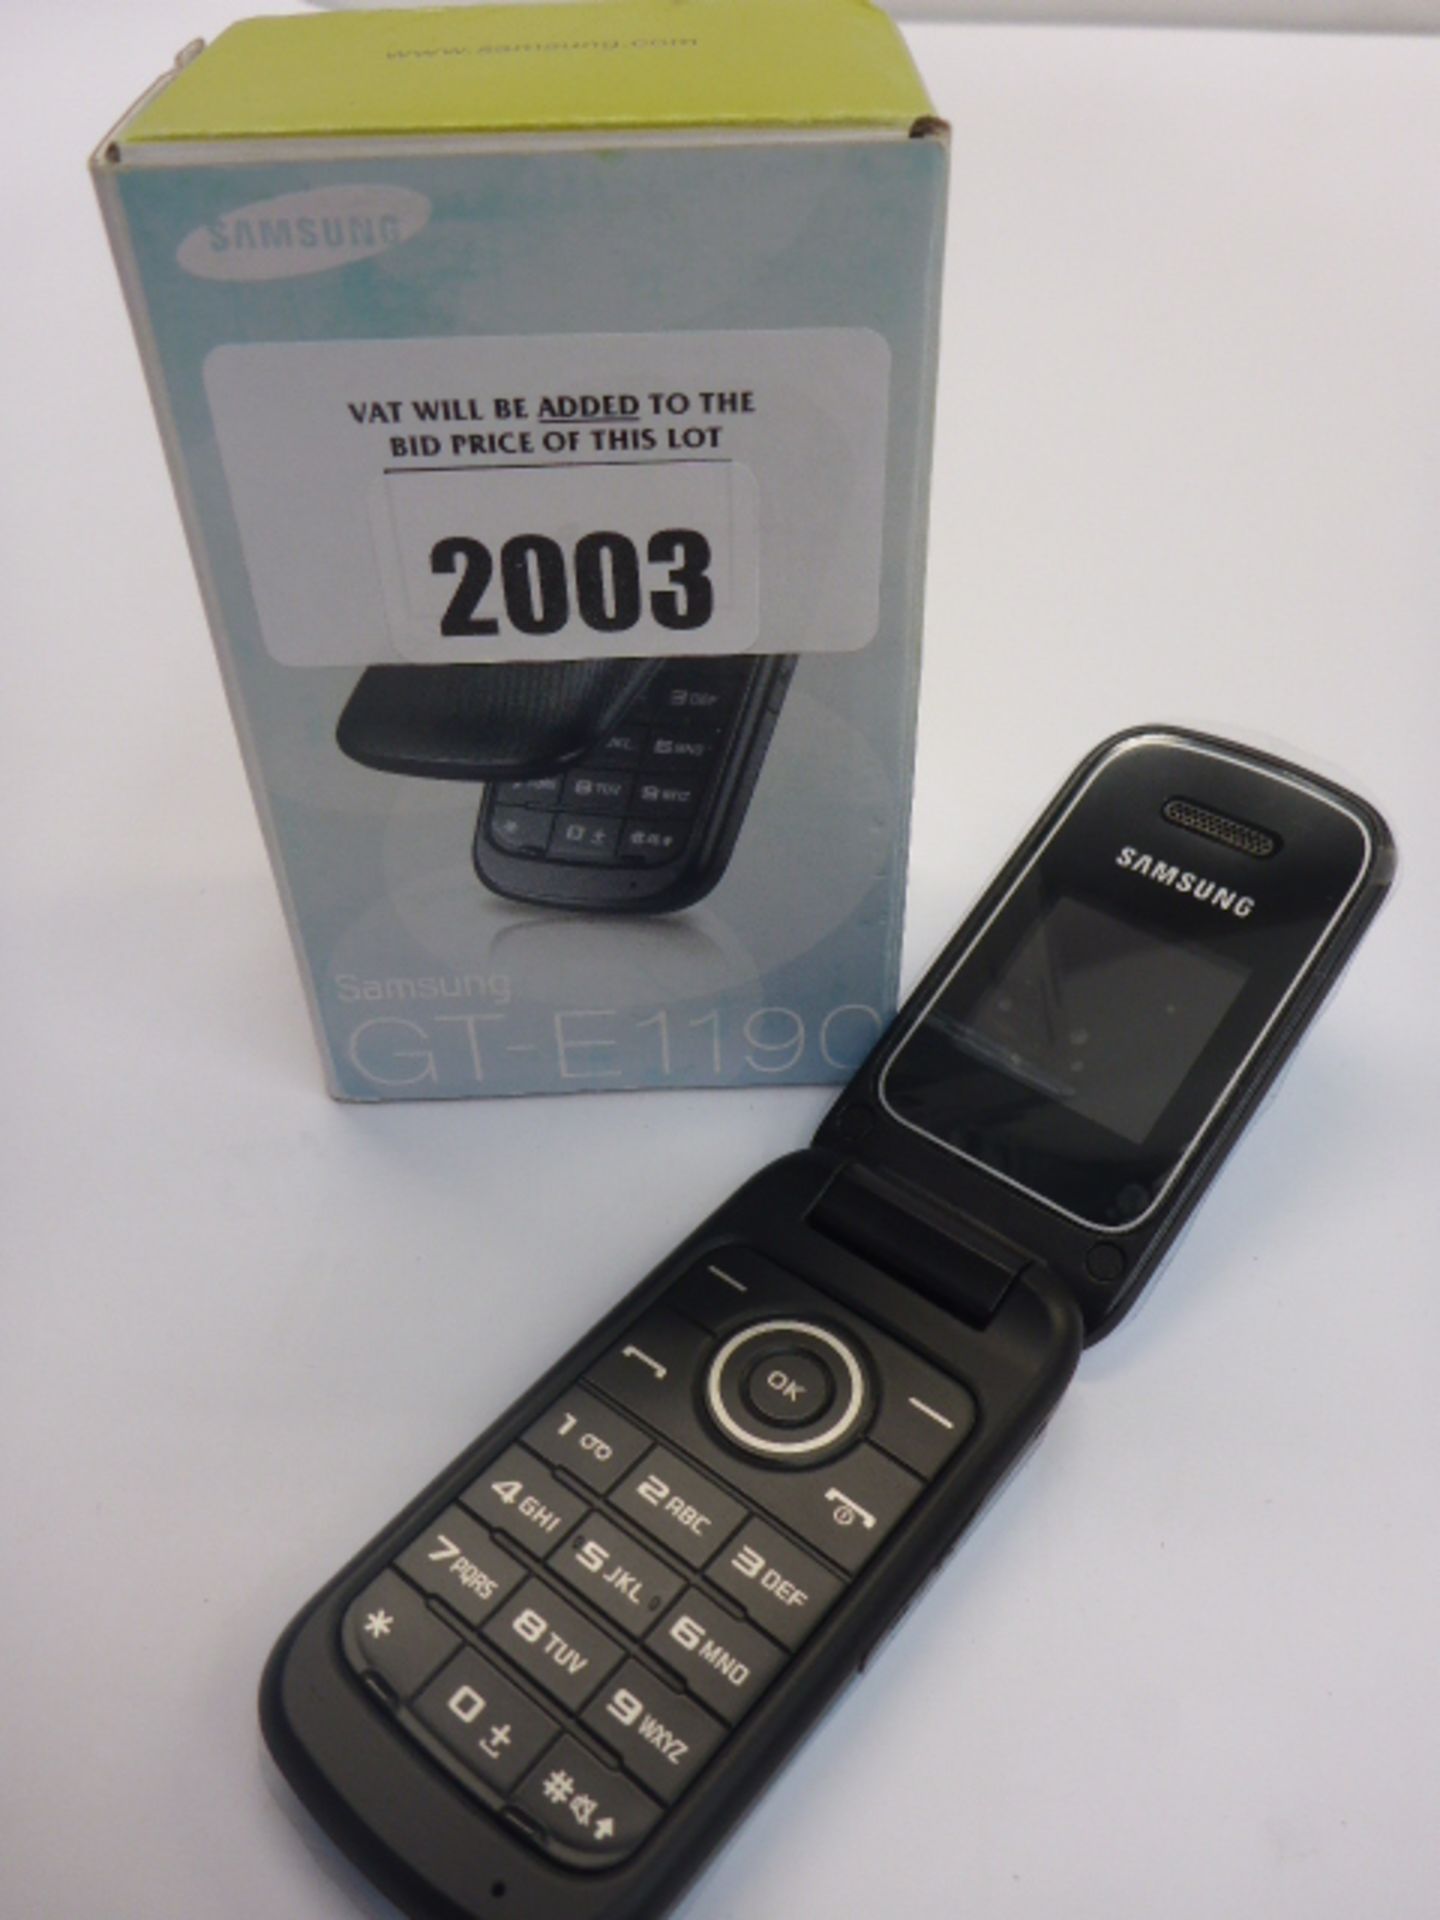 Samsung GT-1190 mobile phone.